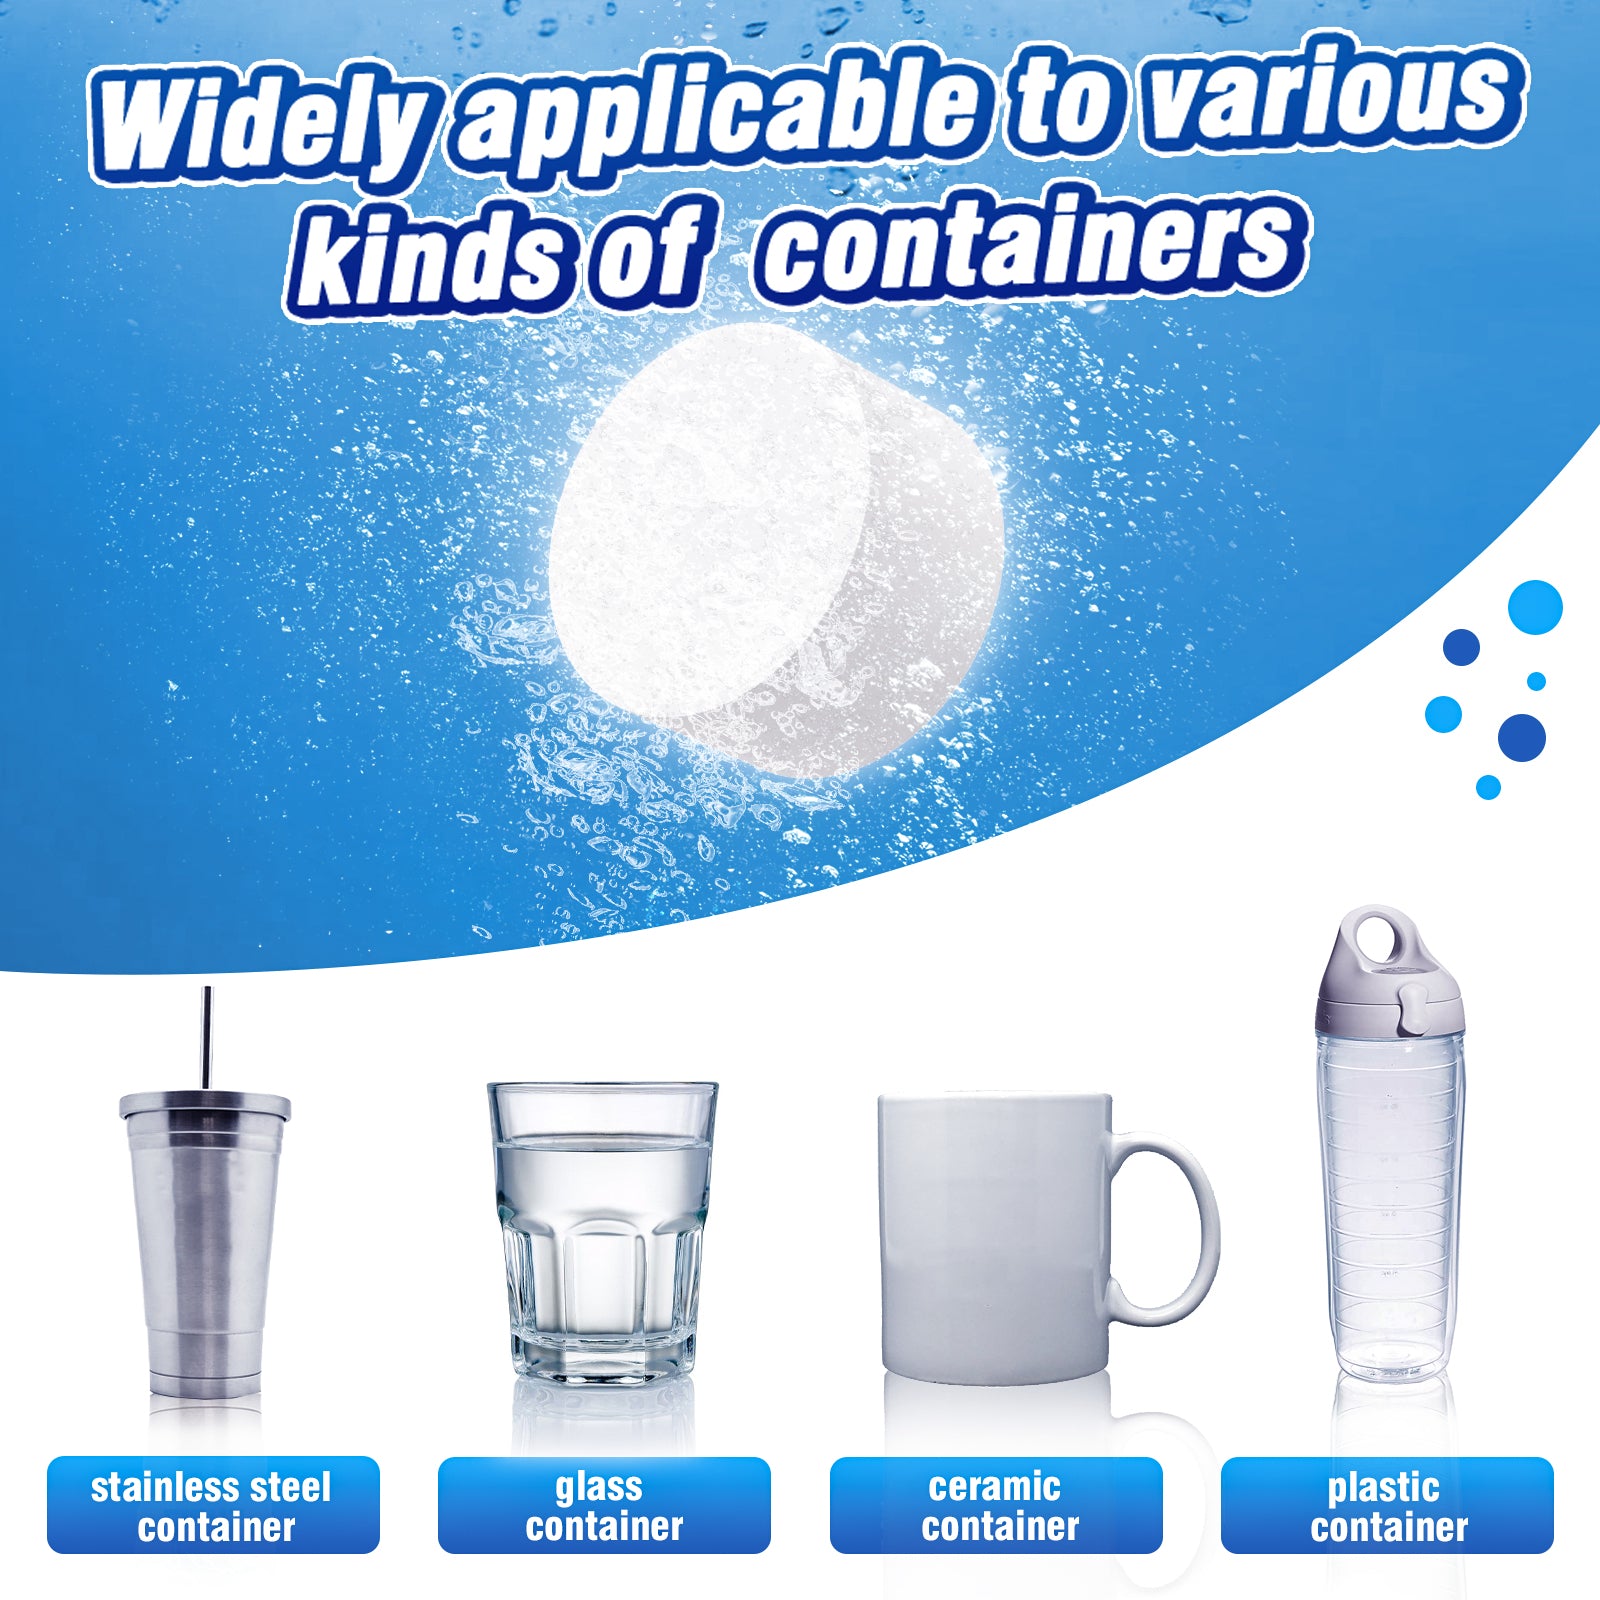 Vacplus Bottle Cleaner Tablets Biodegradable (370)